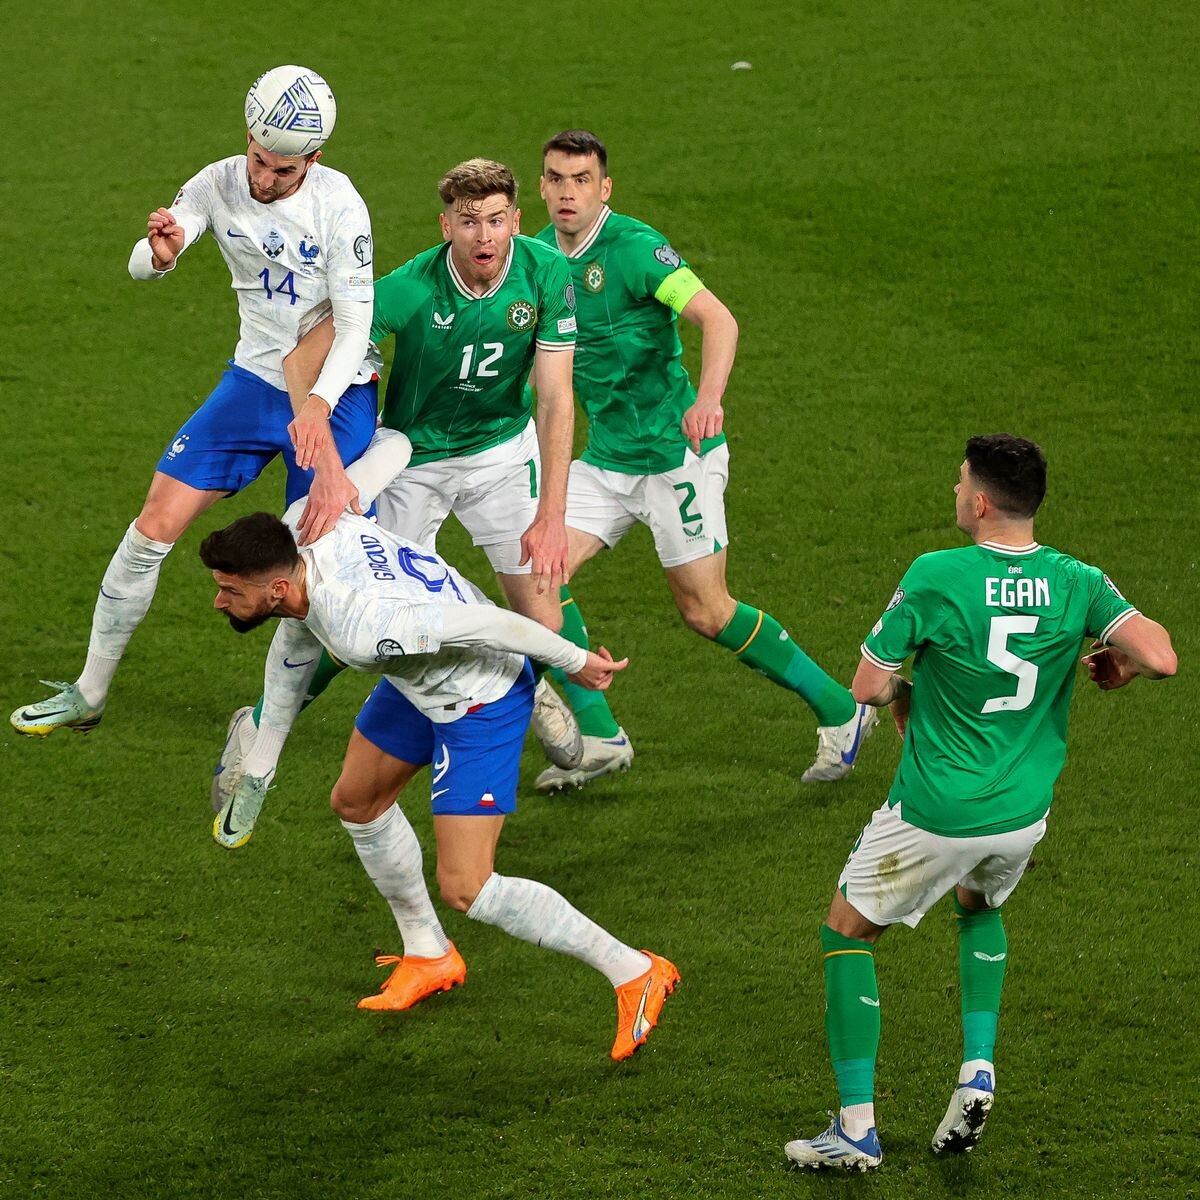 Ireland 0-1 France | Sweden 5-0 Azerbaijan